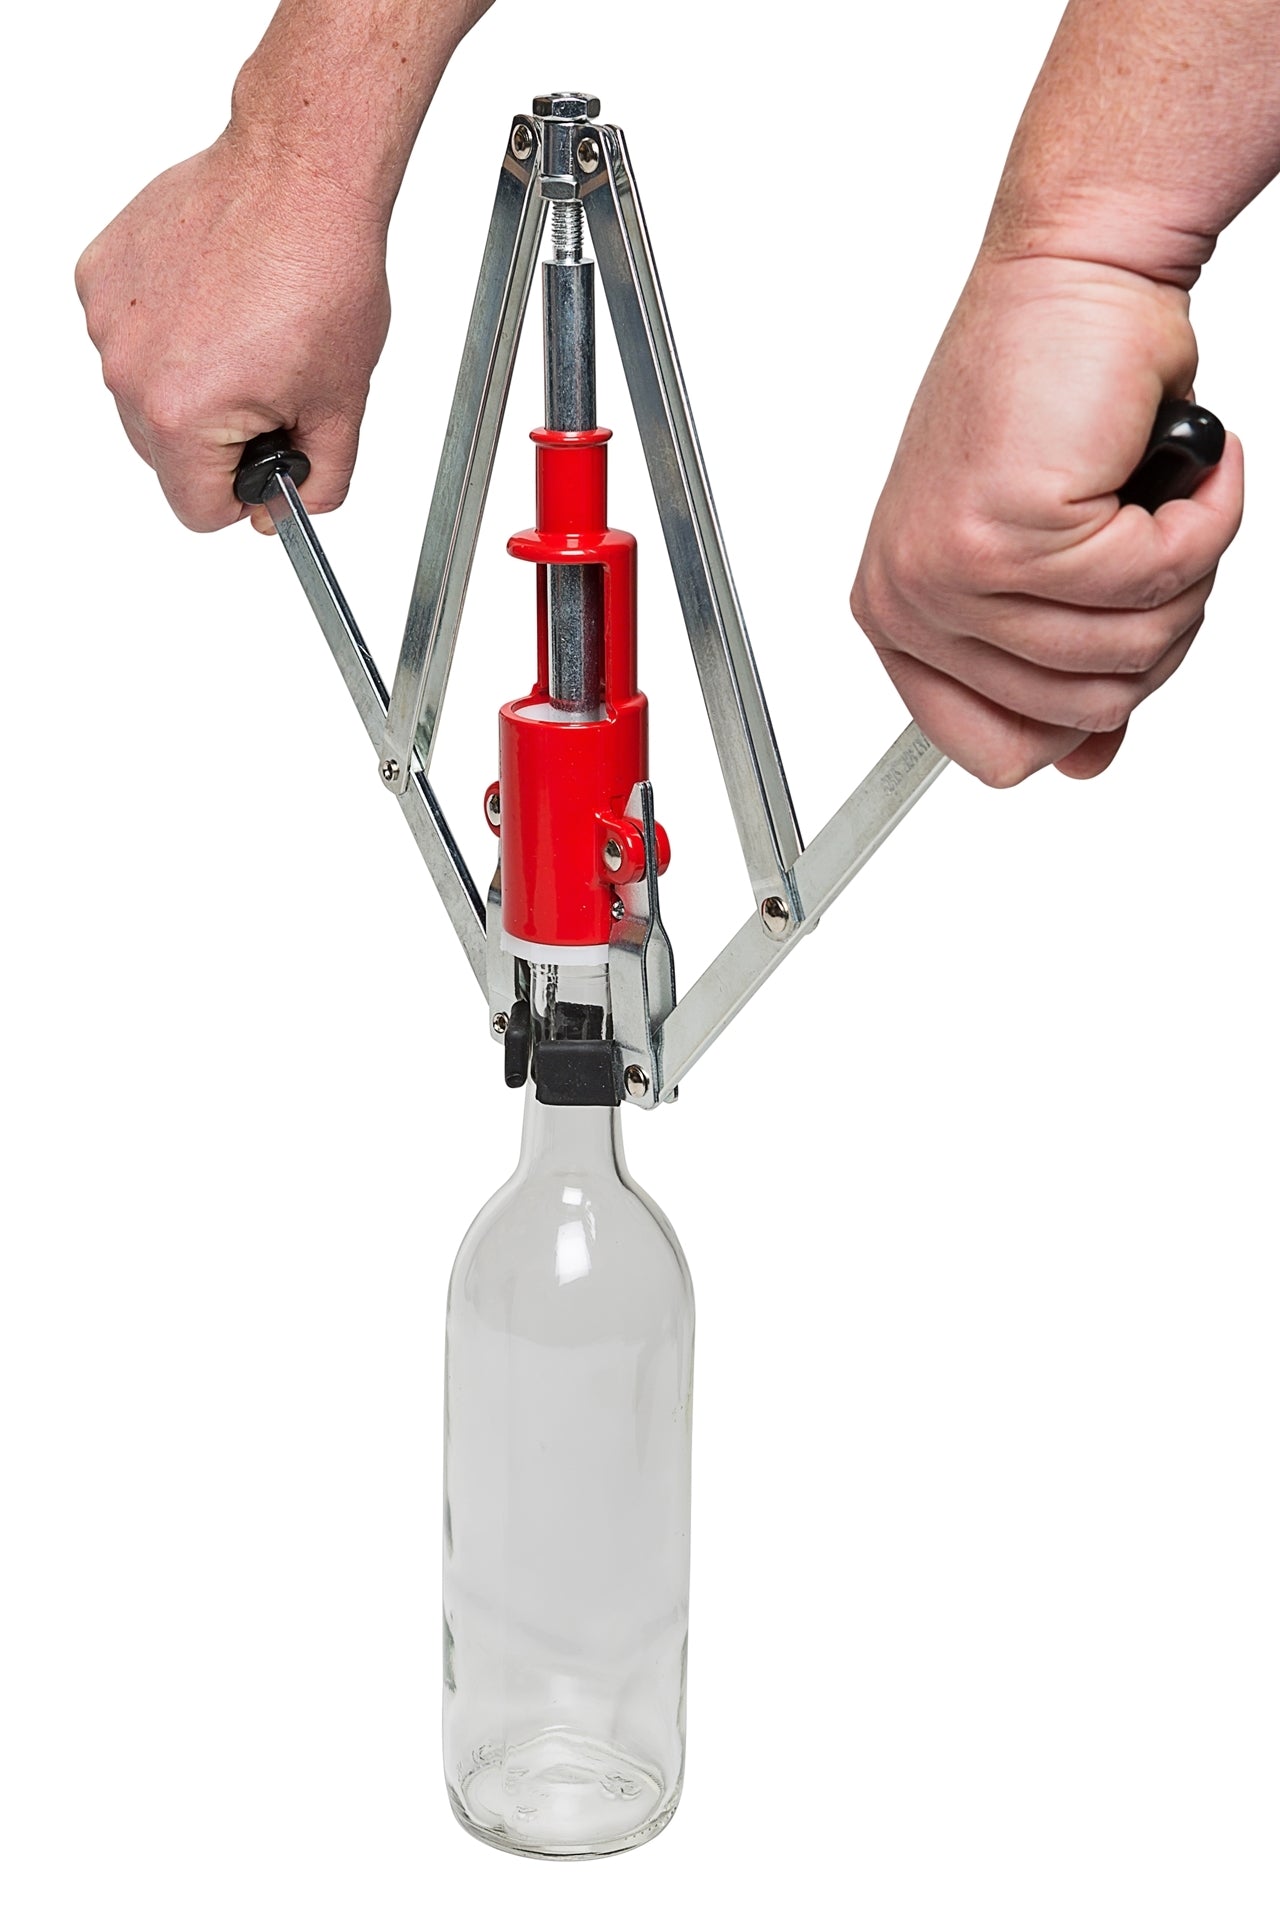 Metal Corking Tool shown corking a bottle